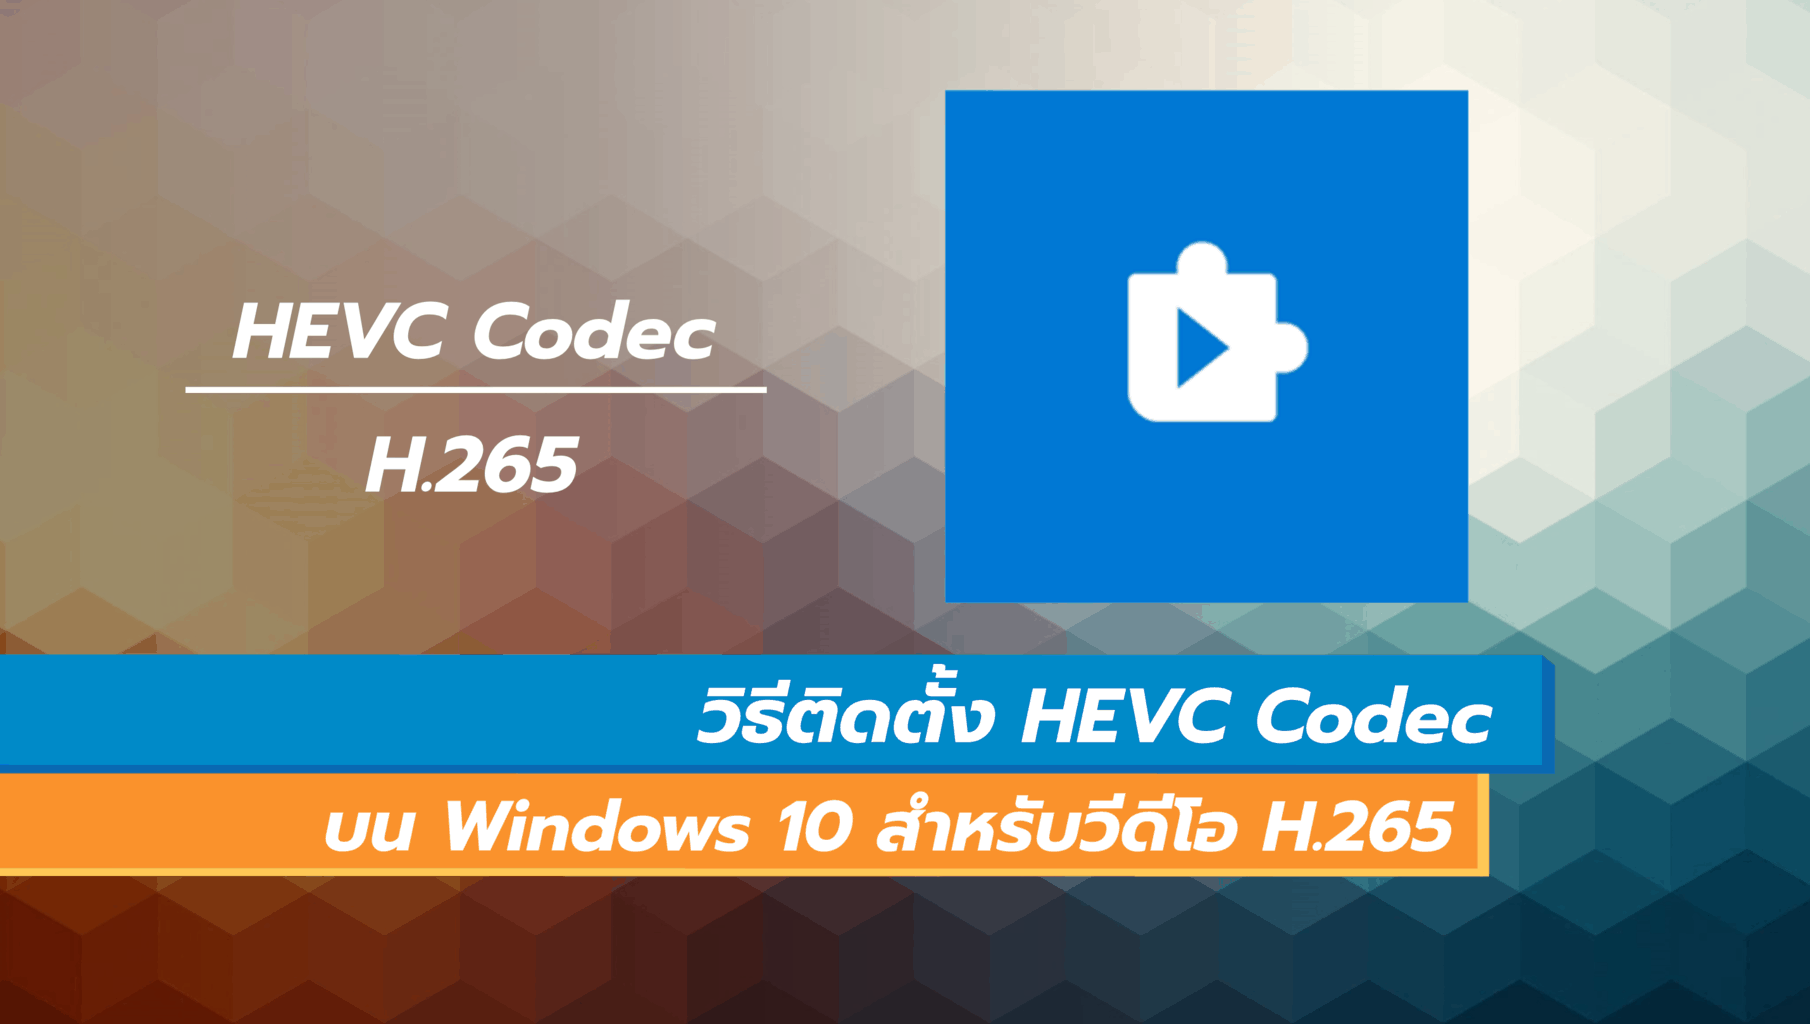 hevc codec windows 10 adobe